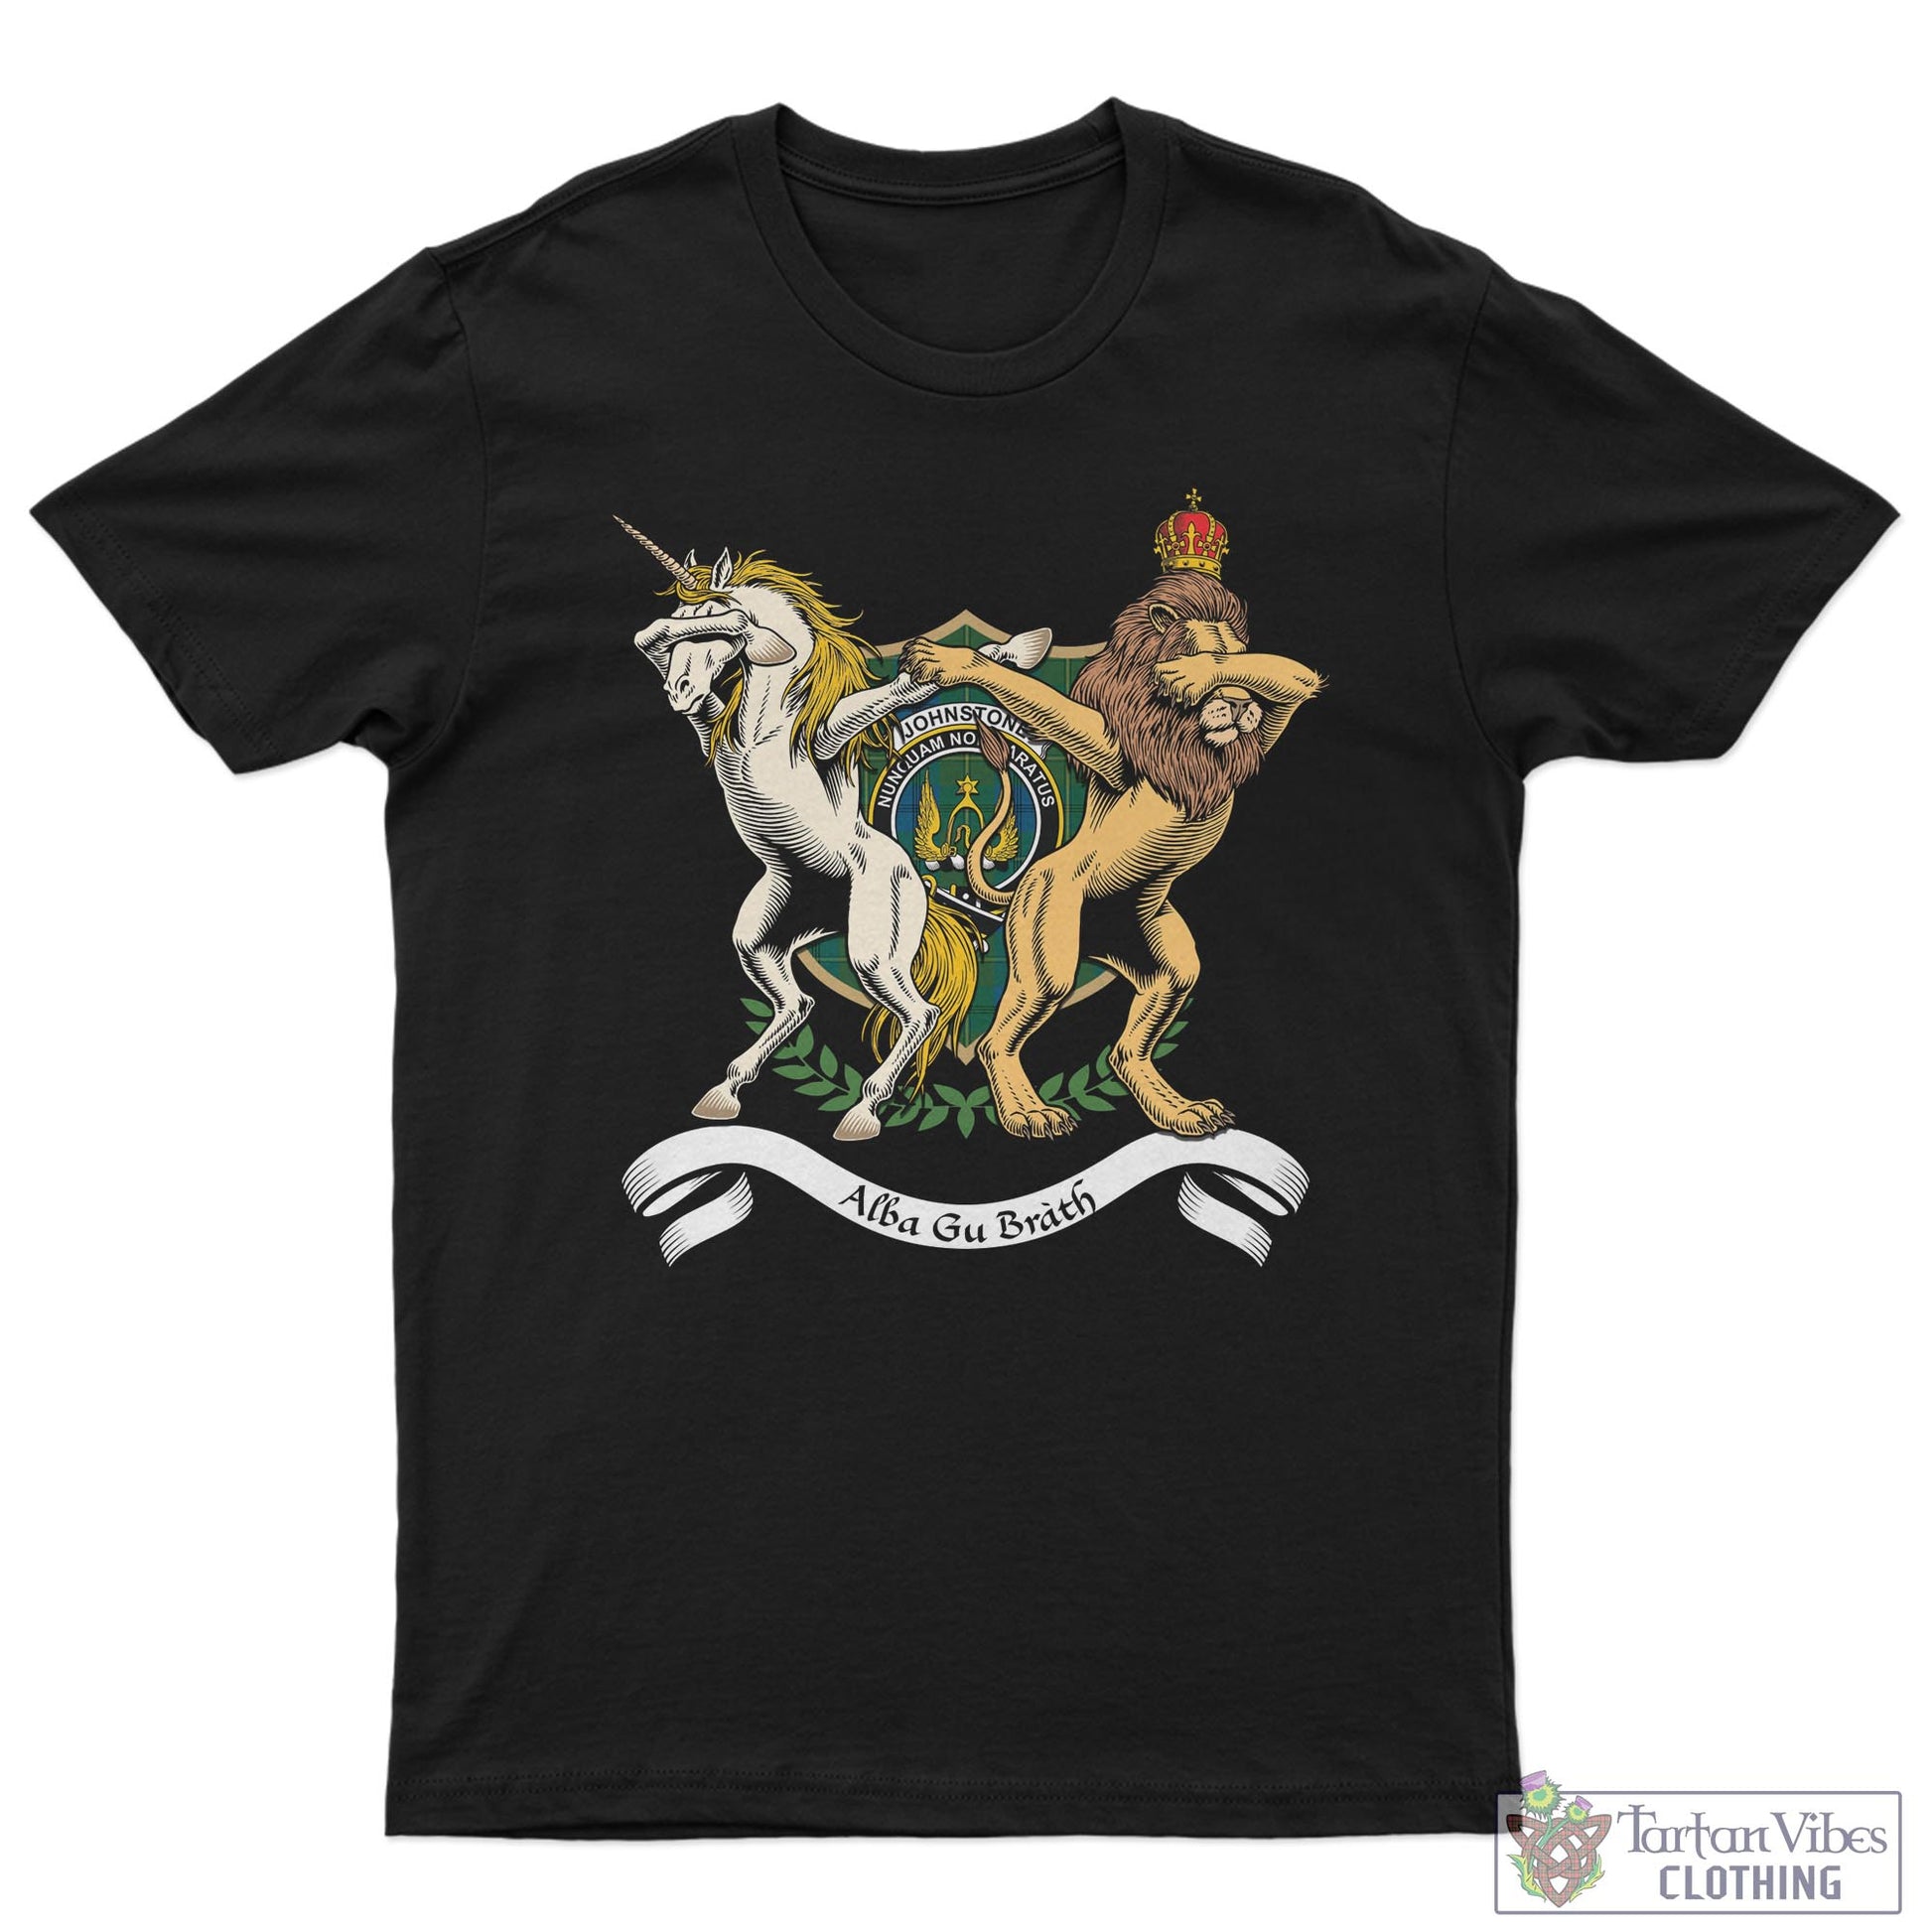 Tartan Vibes Clothing Johnstone-Johnston Family Crest Cotton Men's T-Shirt with Scotland Royal Coat Of Arm Funny Style